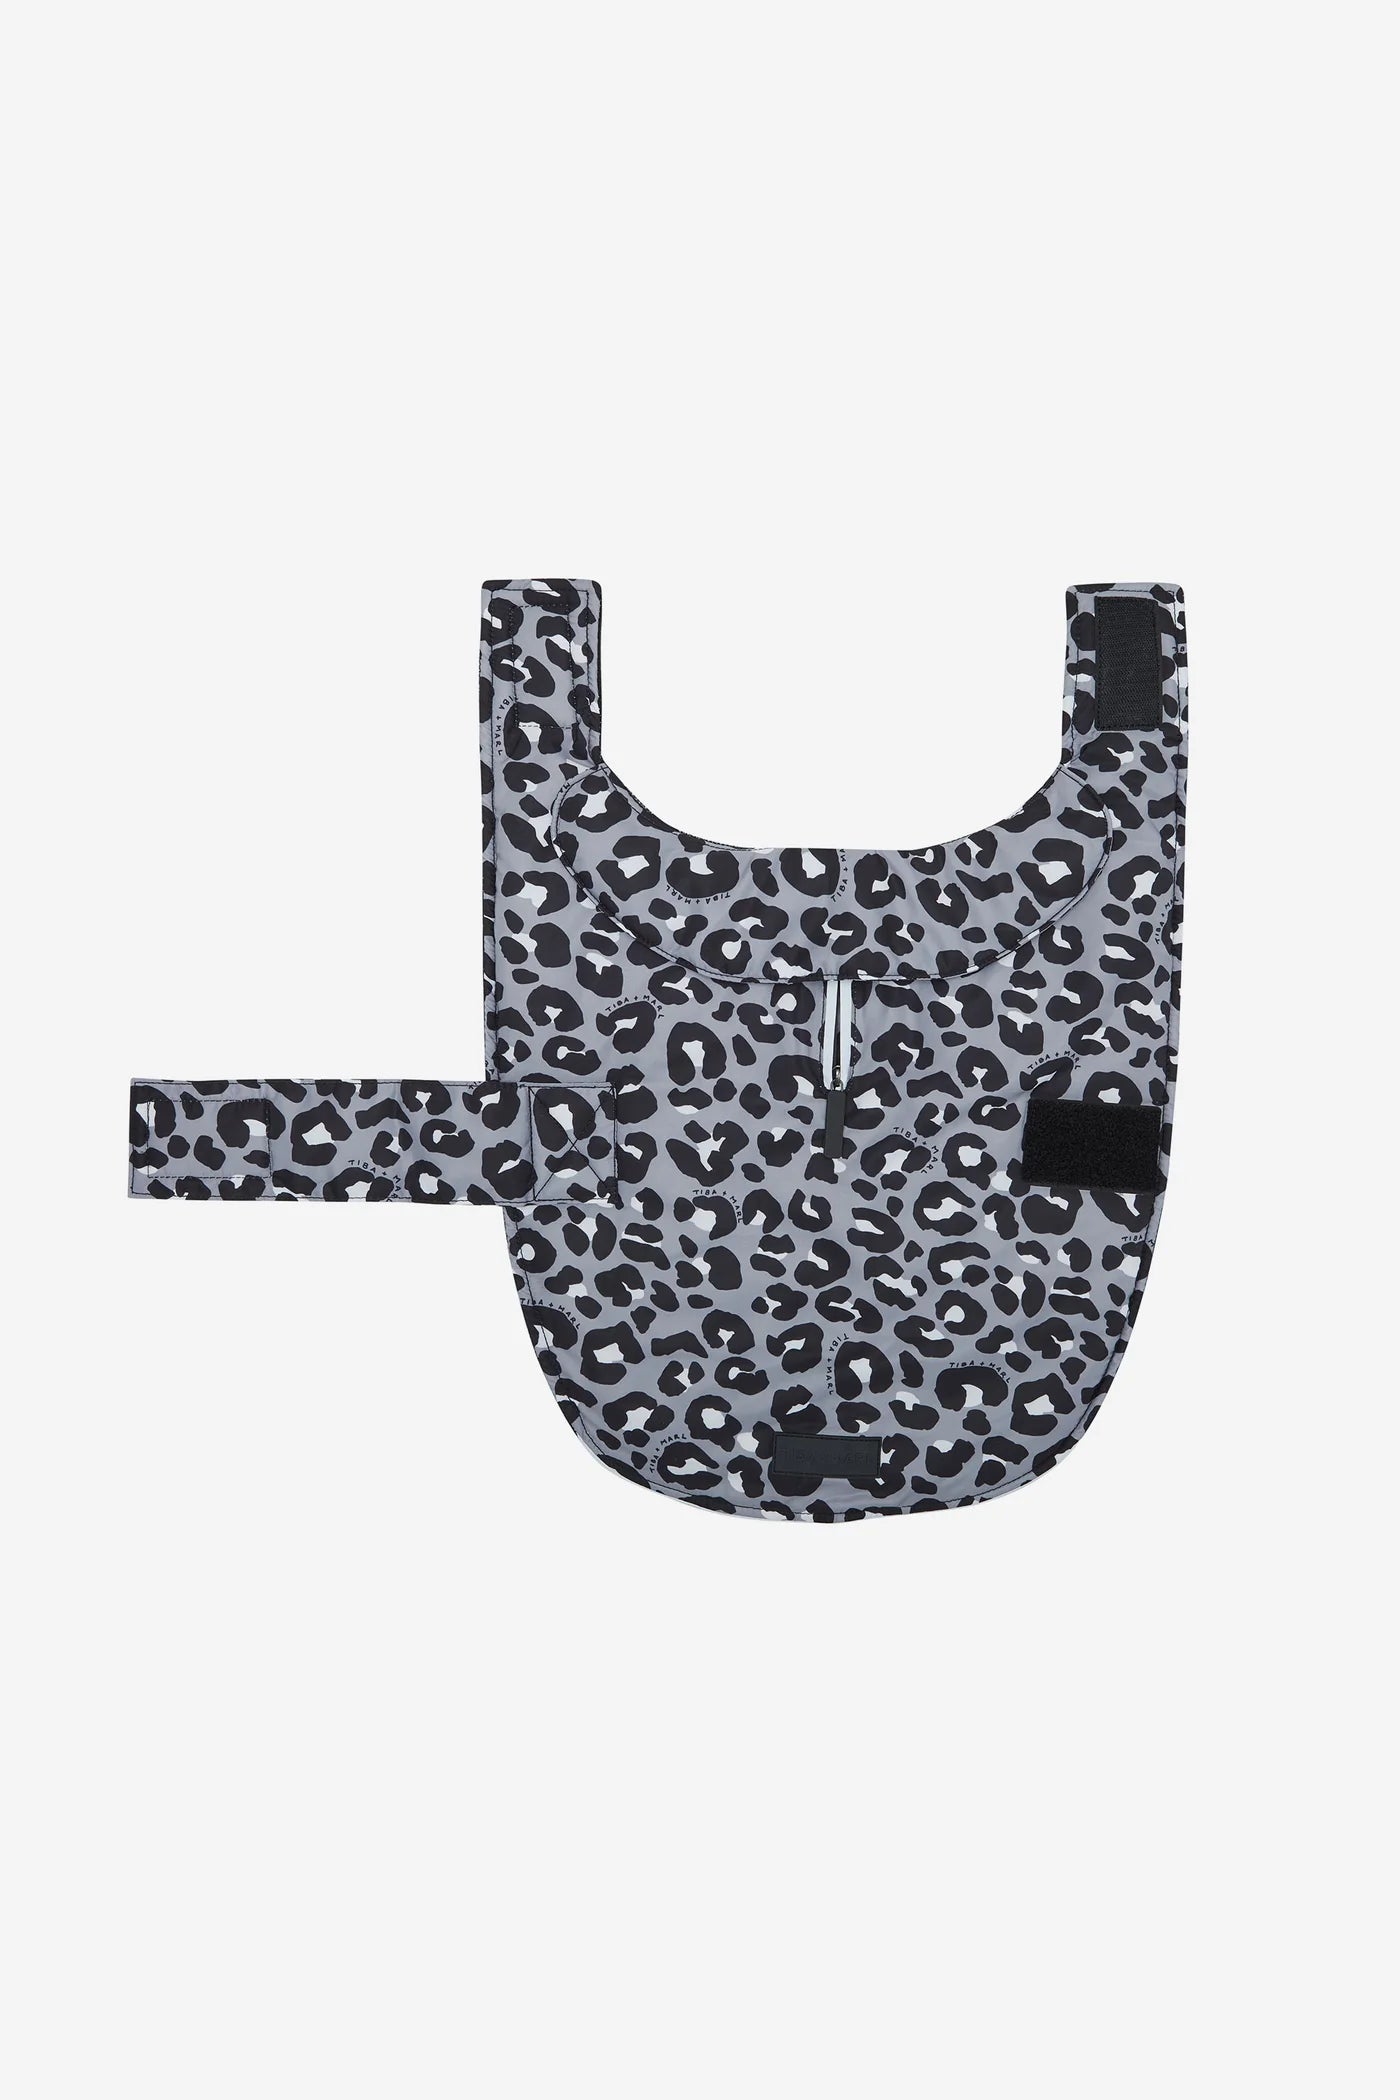 T+M Dog Coat Leopard Print